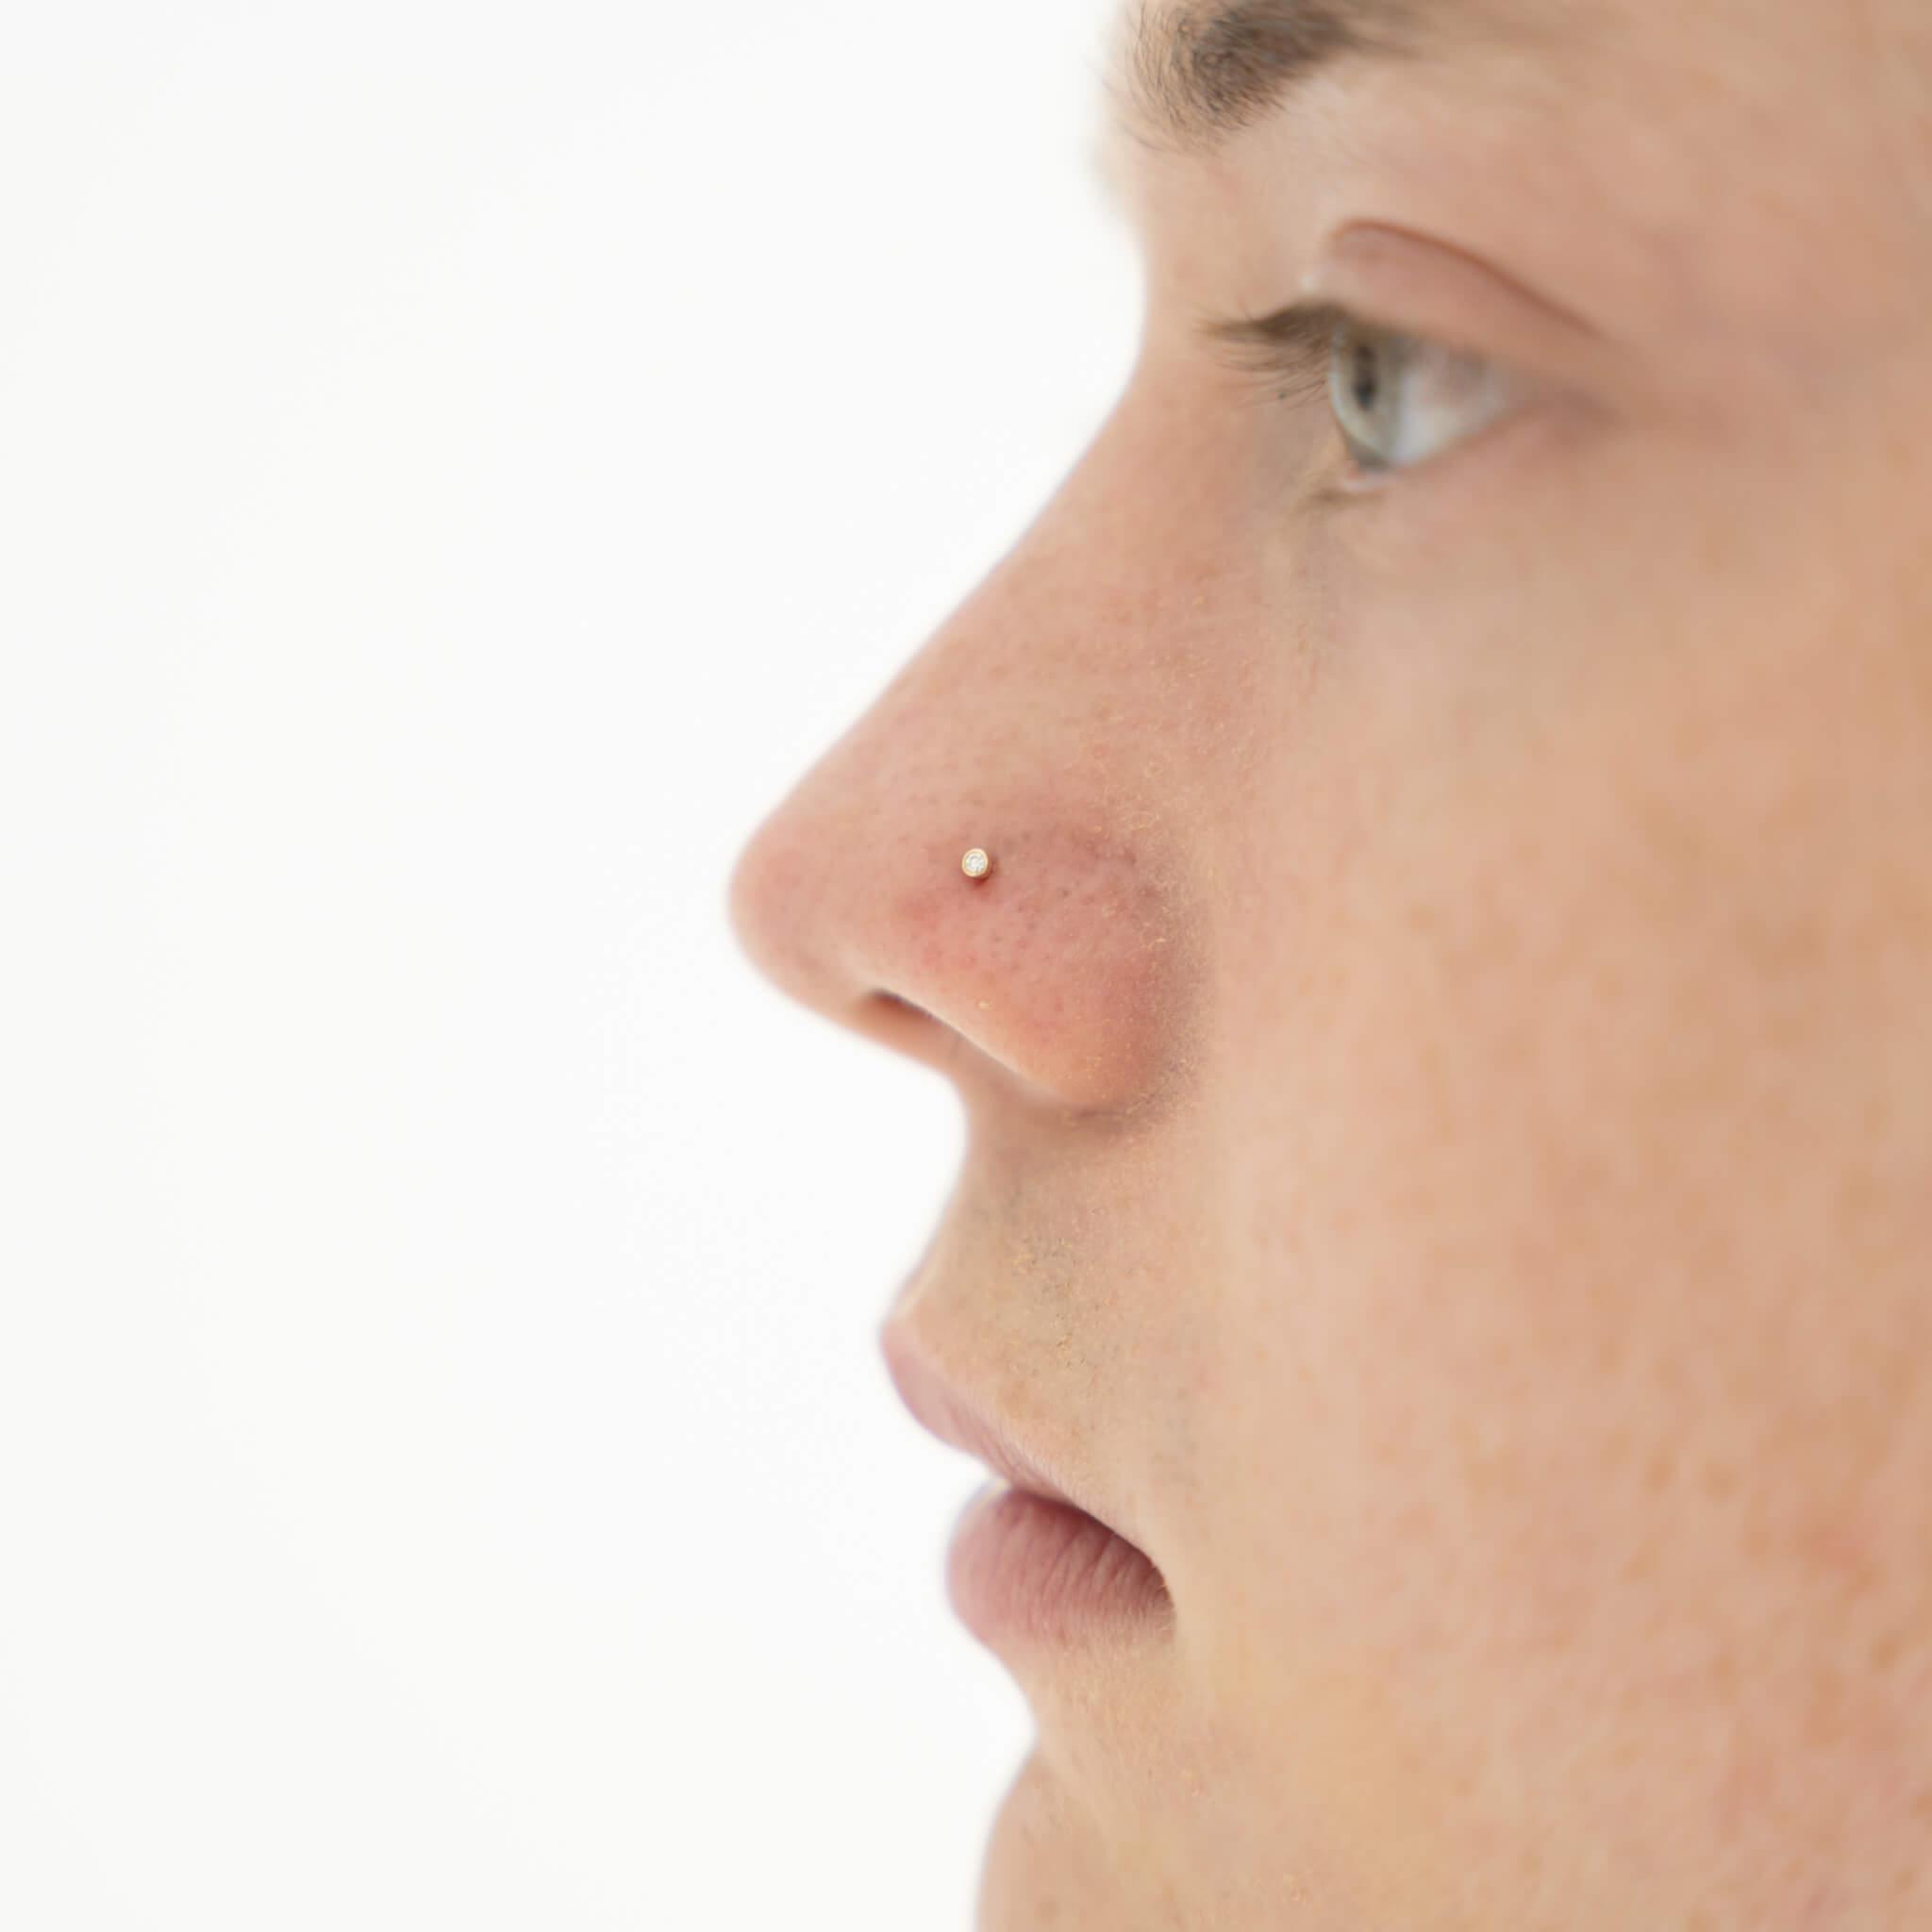 Tiny Nose Stud, Star Nose Stud, Star Nose Ring, Tiny Nose Stud Gold, Rose  Gold Nose Stud, Small Nose Stud, Tiny Piercing, Starfish Nose Stud - Etsy | Tiny  nose studs, Nose